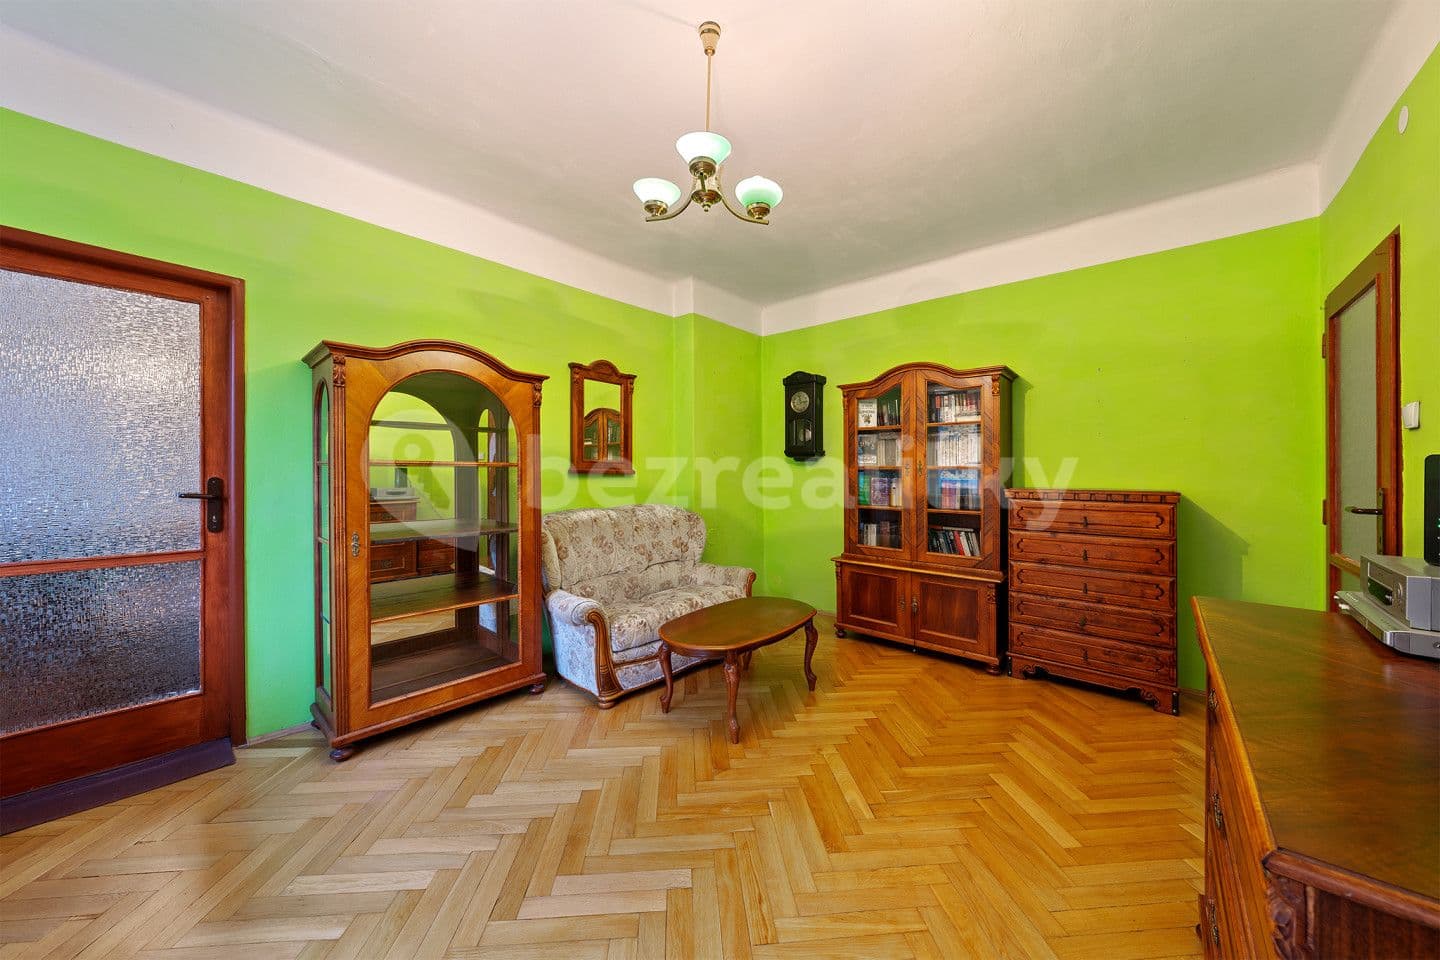 3 bedroom flat for sale, 60 m², Zrenjaninská, Teplice, Ústecký Region